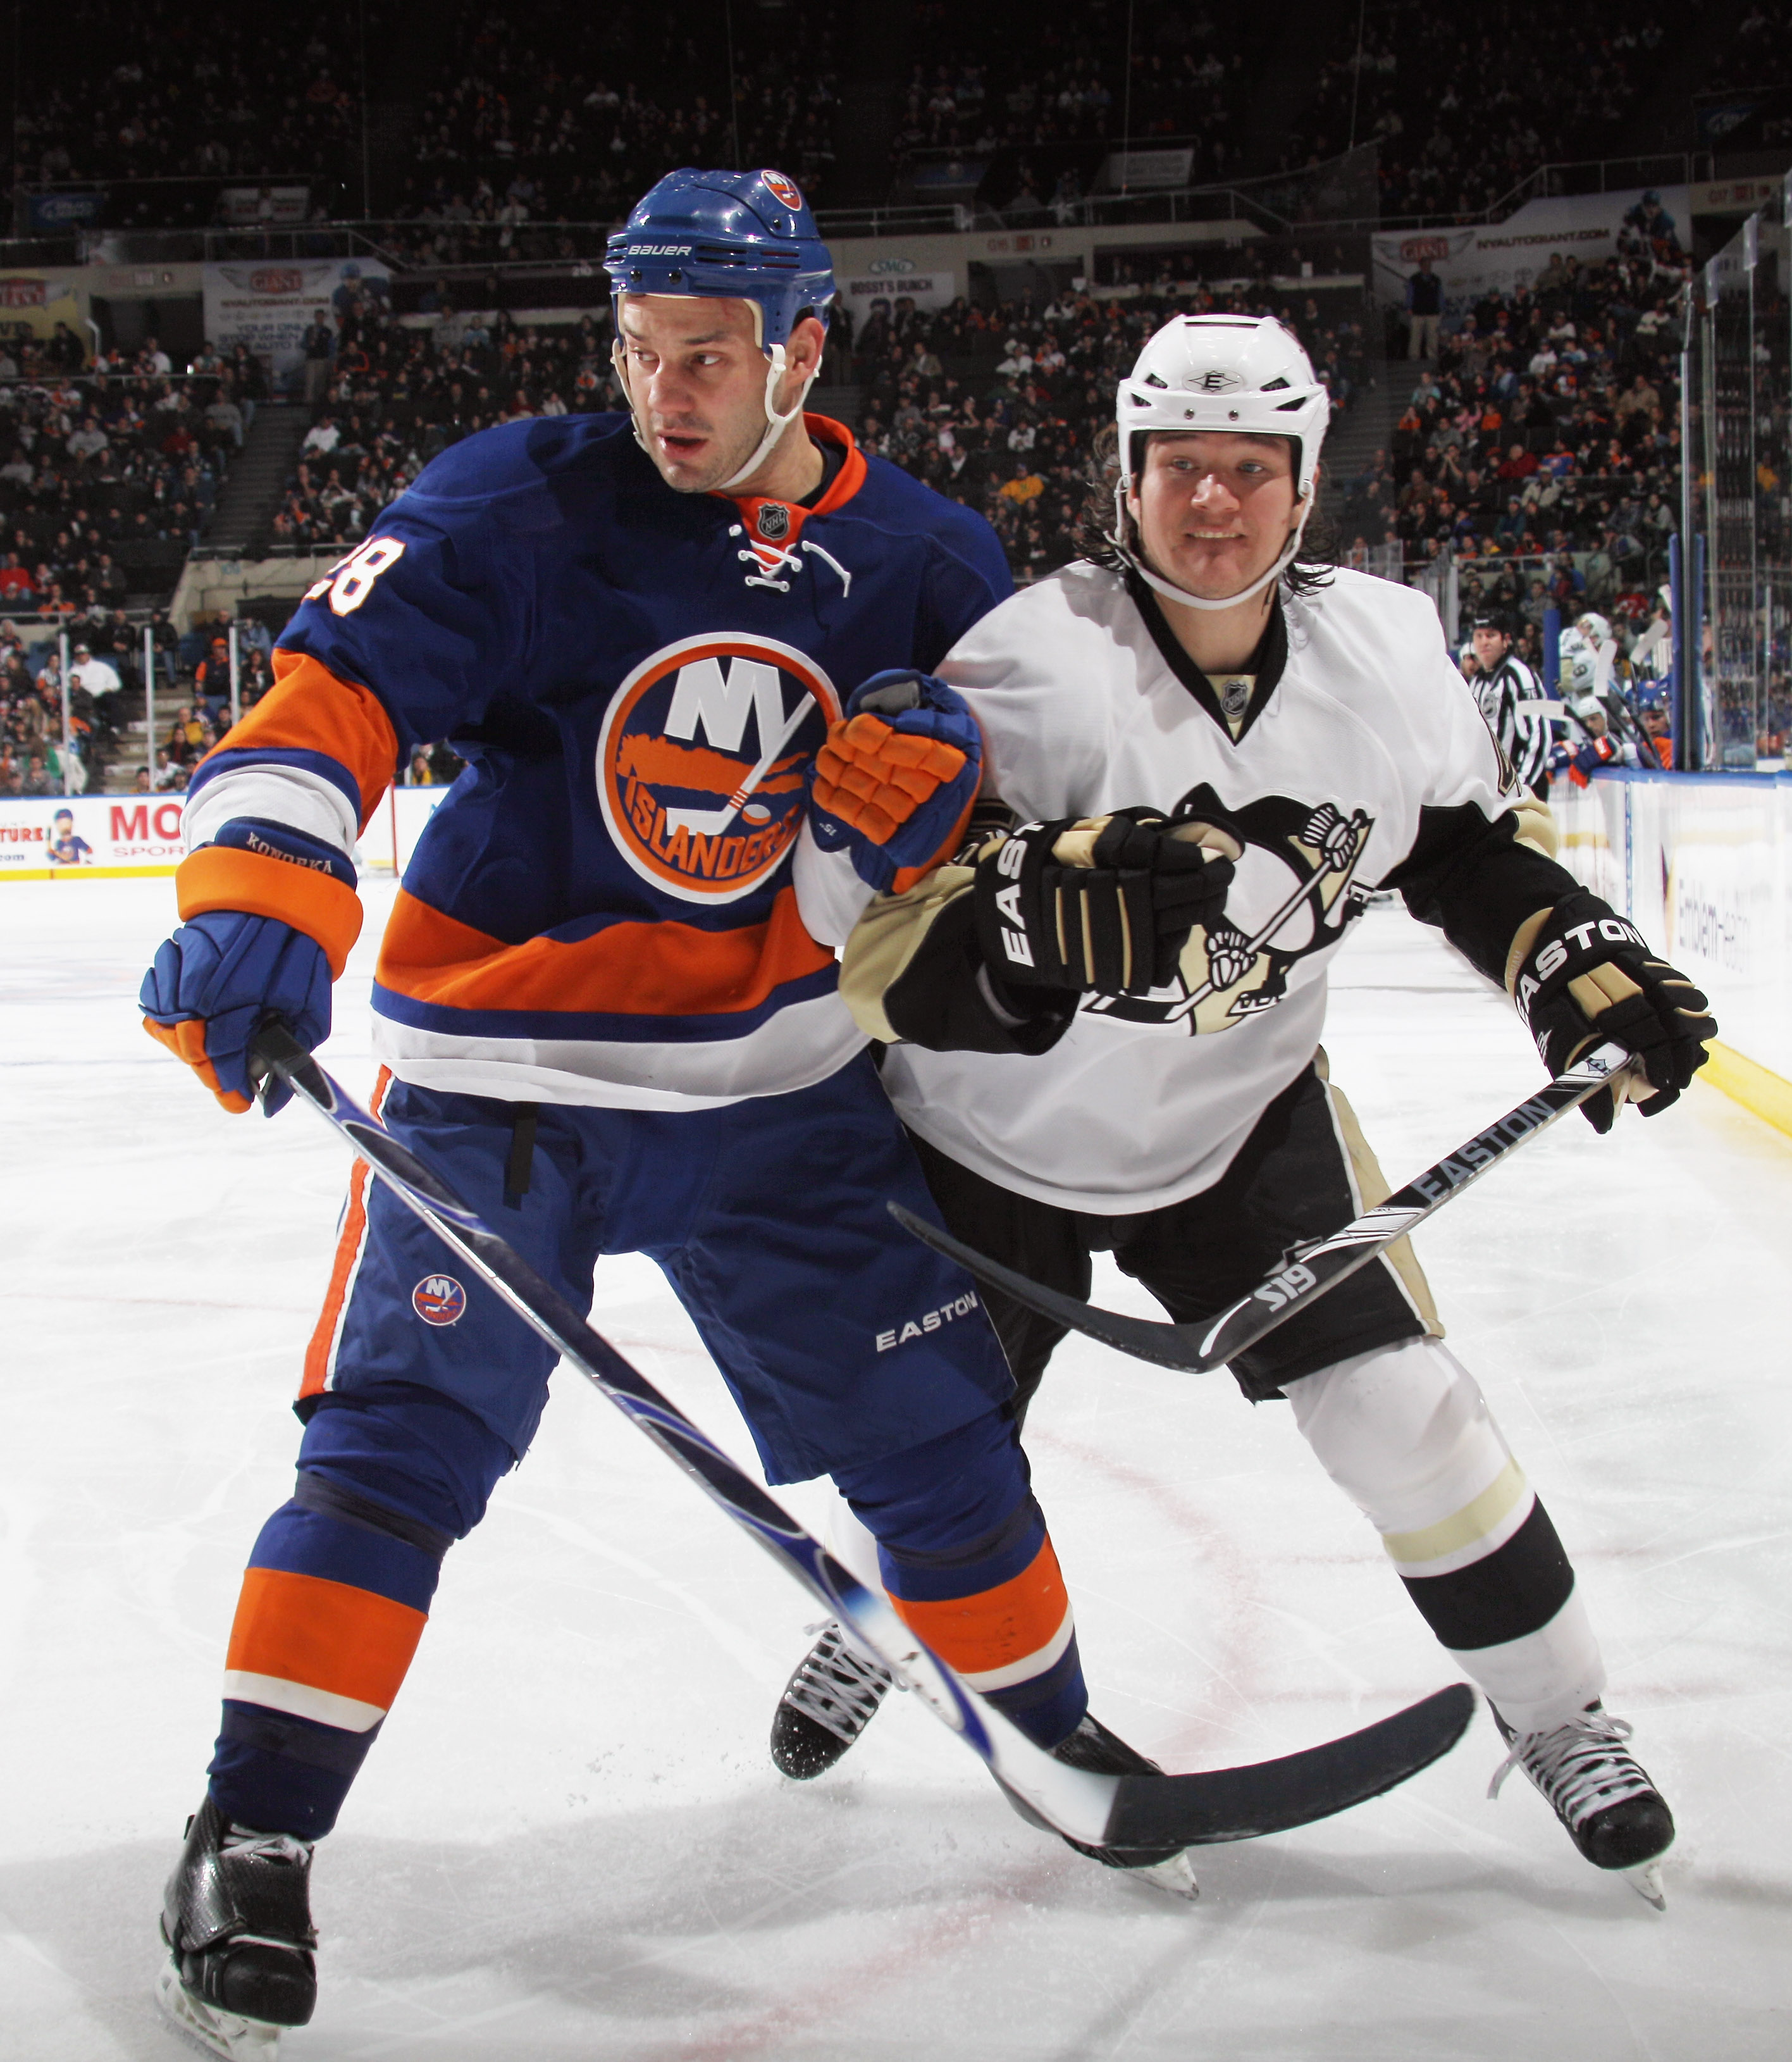 UNIONDALE, NY - DECEMBER 29:  Arron Asham #45 of the Pittsburgh Penguins skates against Zenon Konopka #28 of the New York Islanders at the Nassau Coliseum on December 29, 2010 in Uniondale, New York. The Islanders defeated the Penguins 2-1 in the shootout